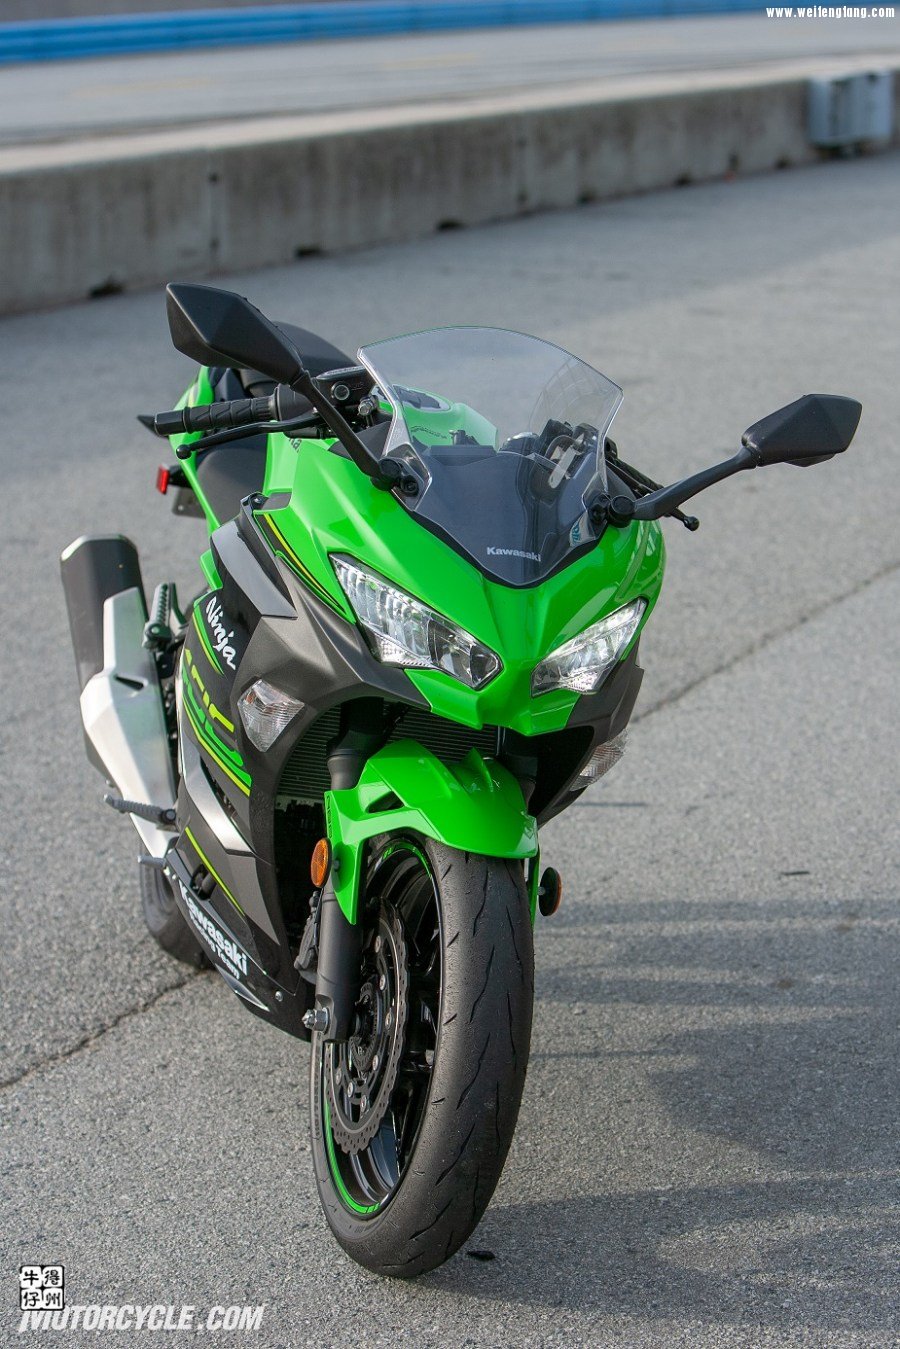 062218-Lightweight-Sportbikes-Kawasaki-Ninja-400-07.jpg